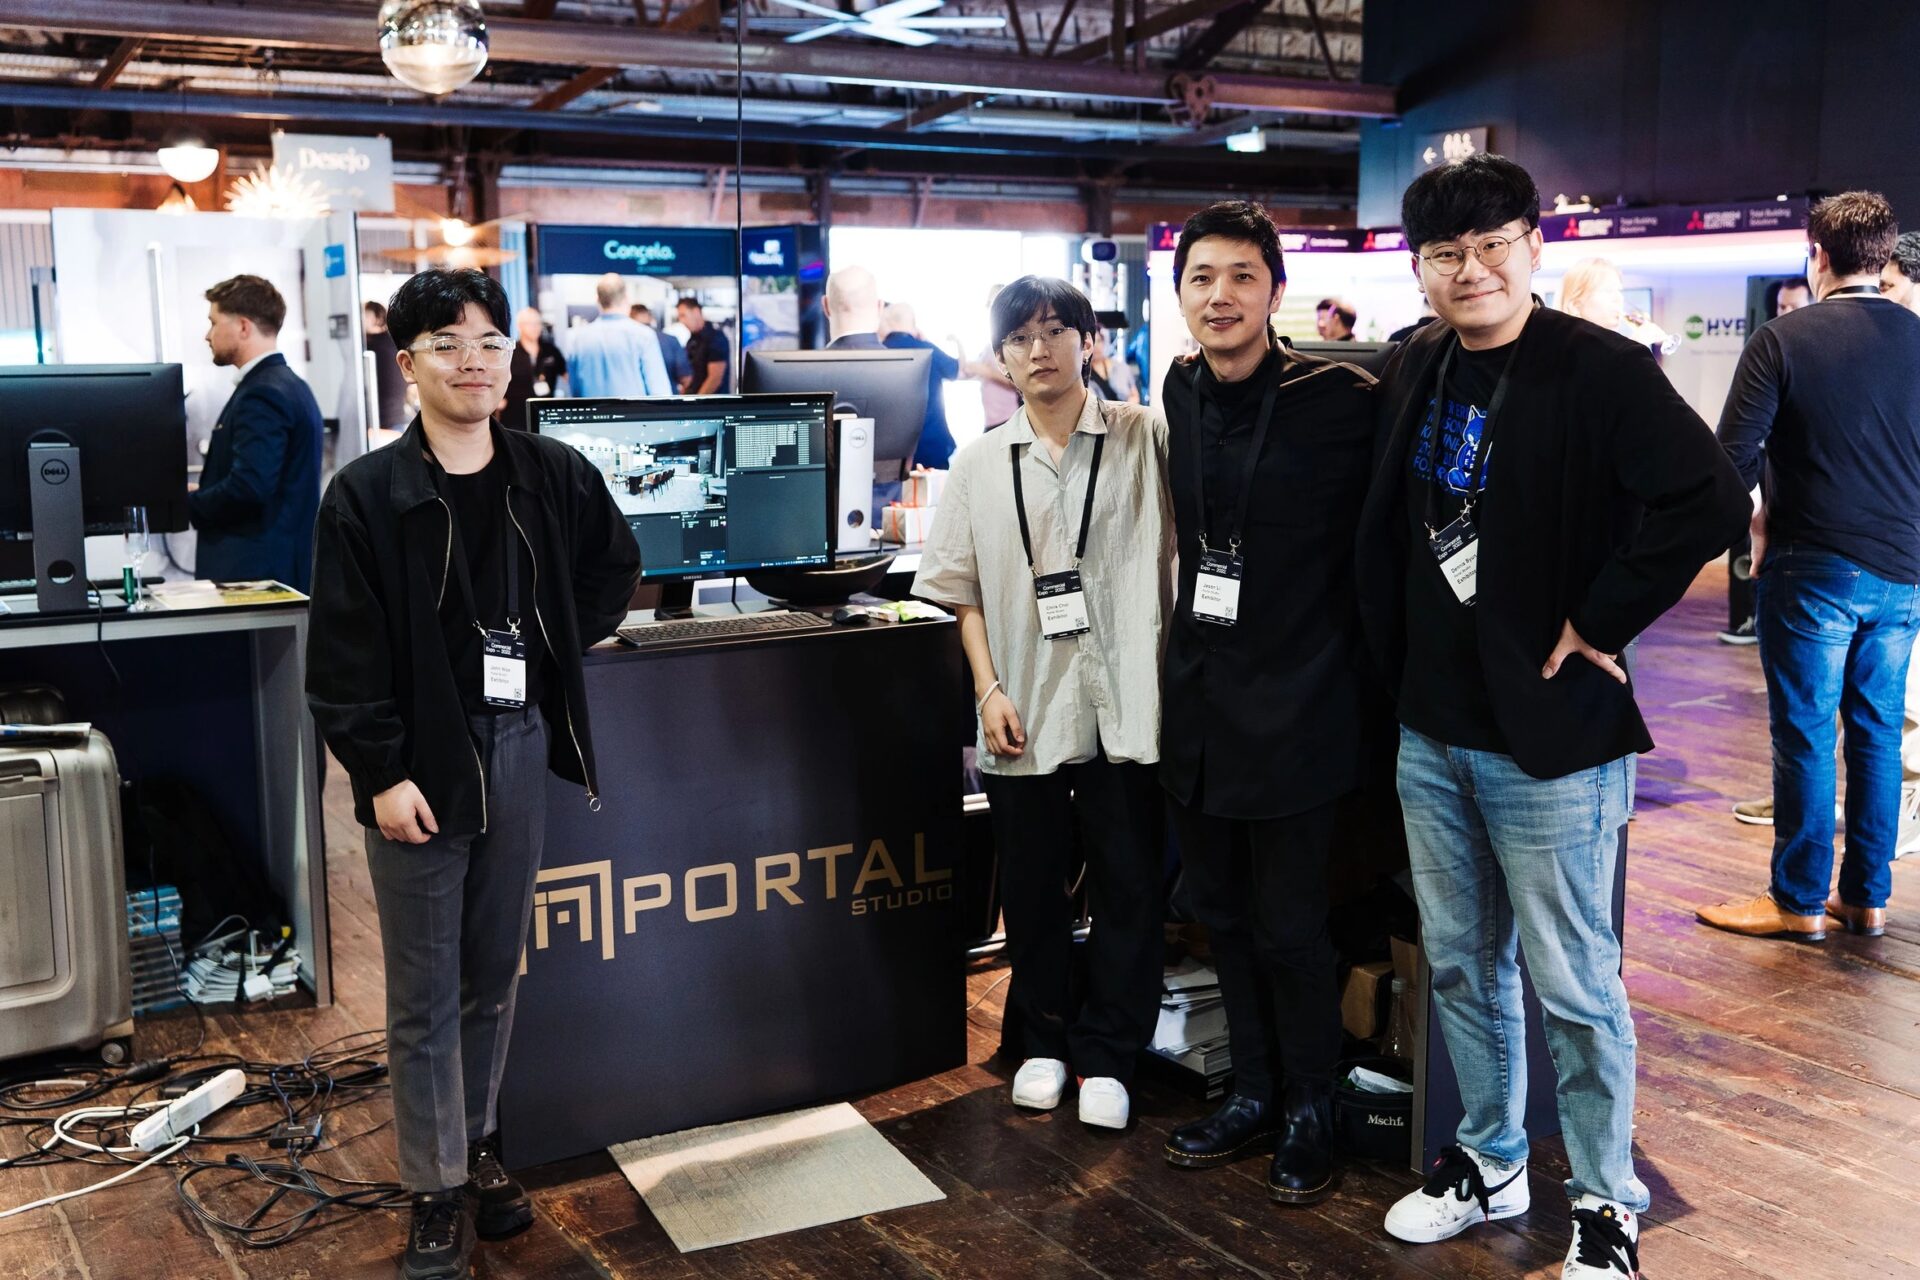 Photo of the Portal Studio team together